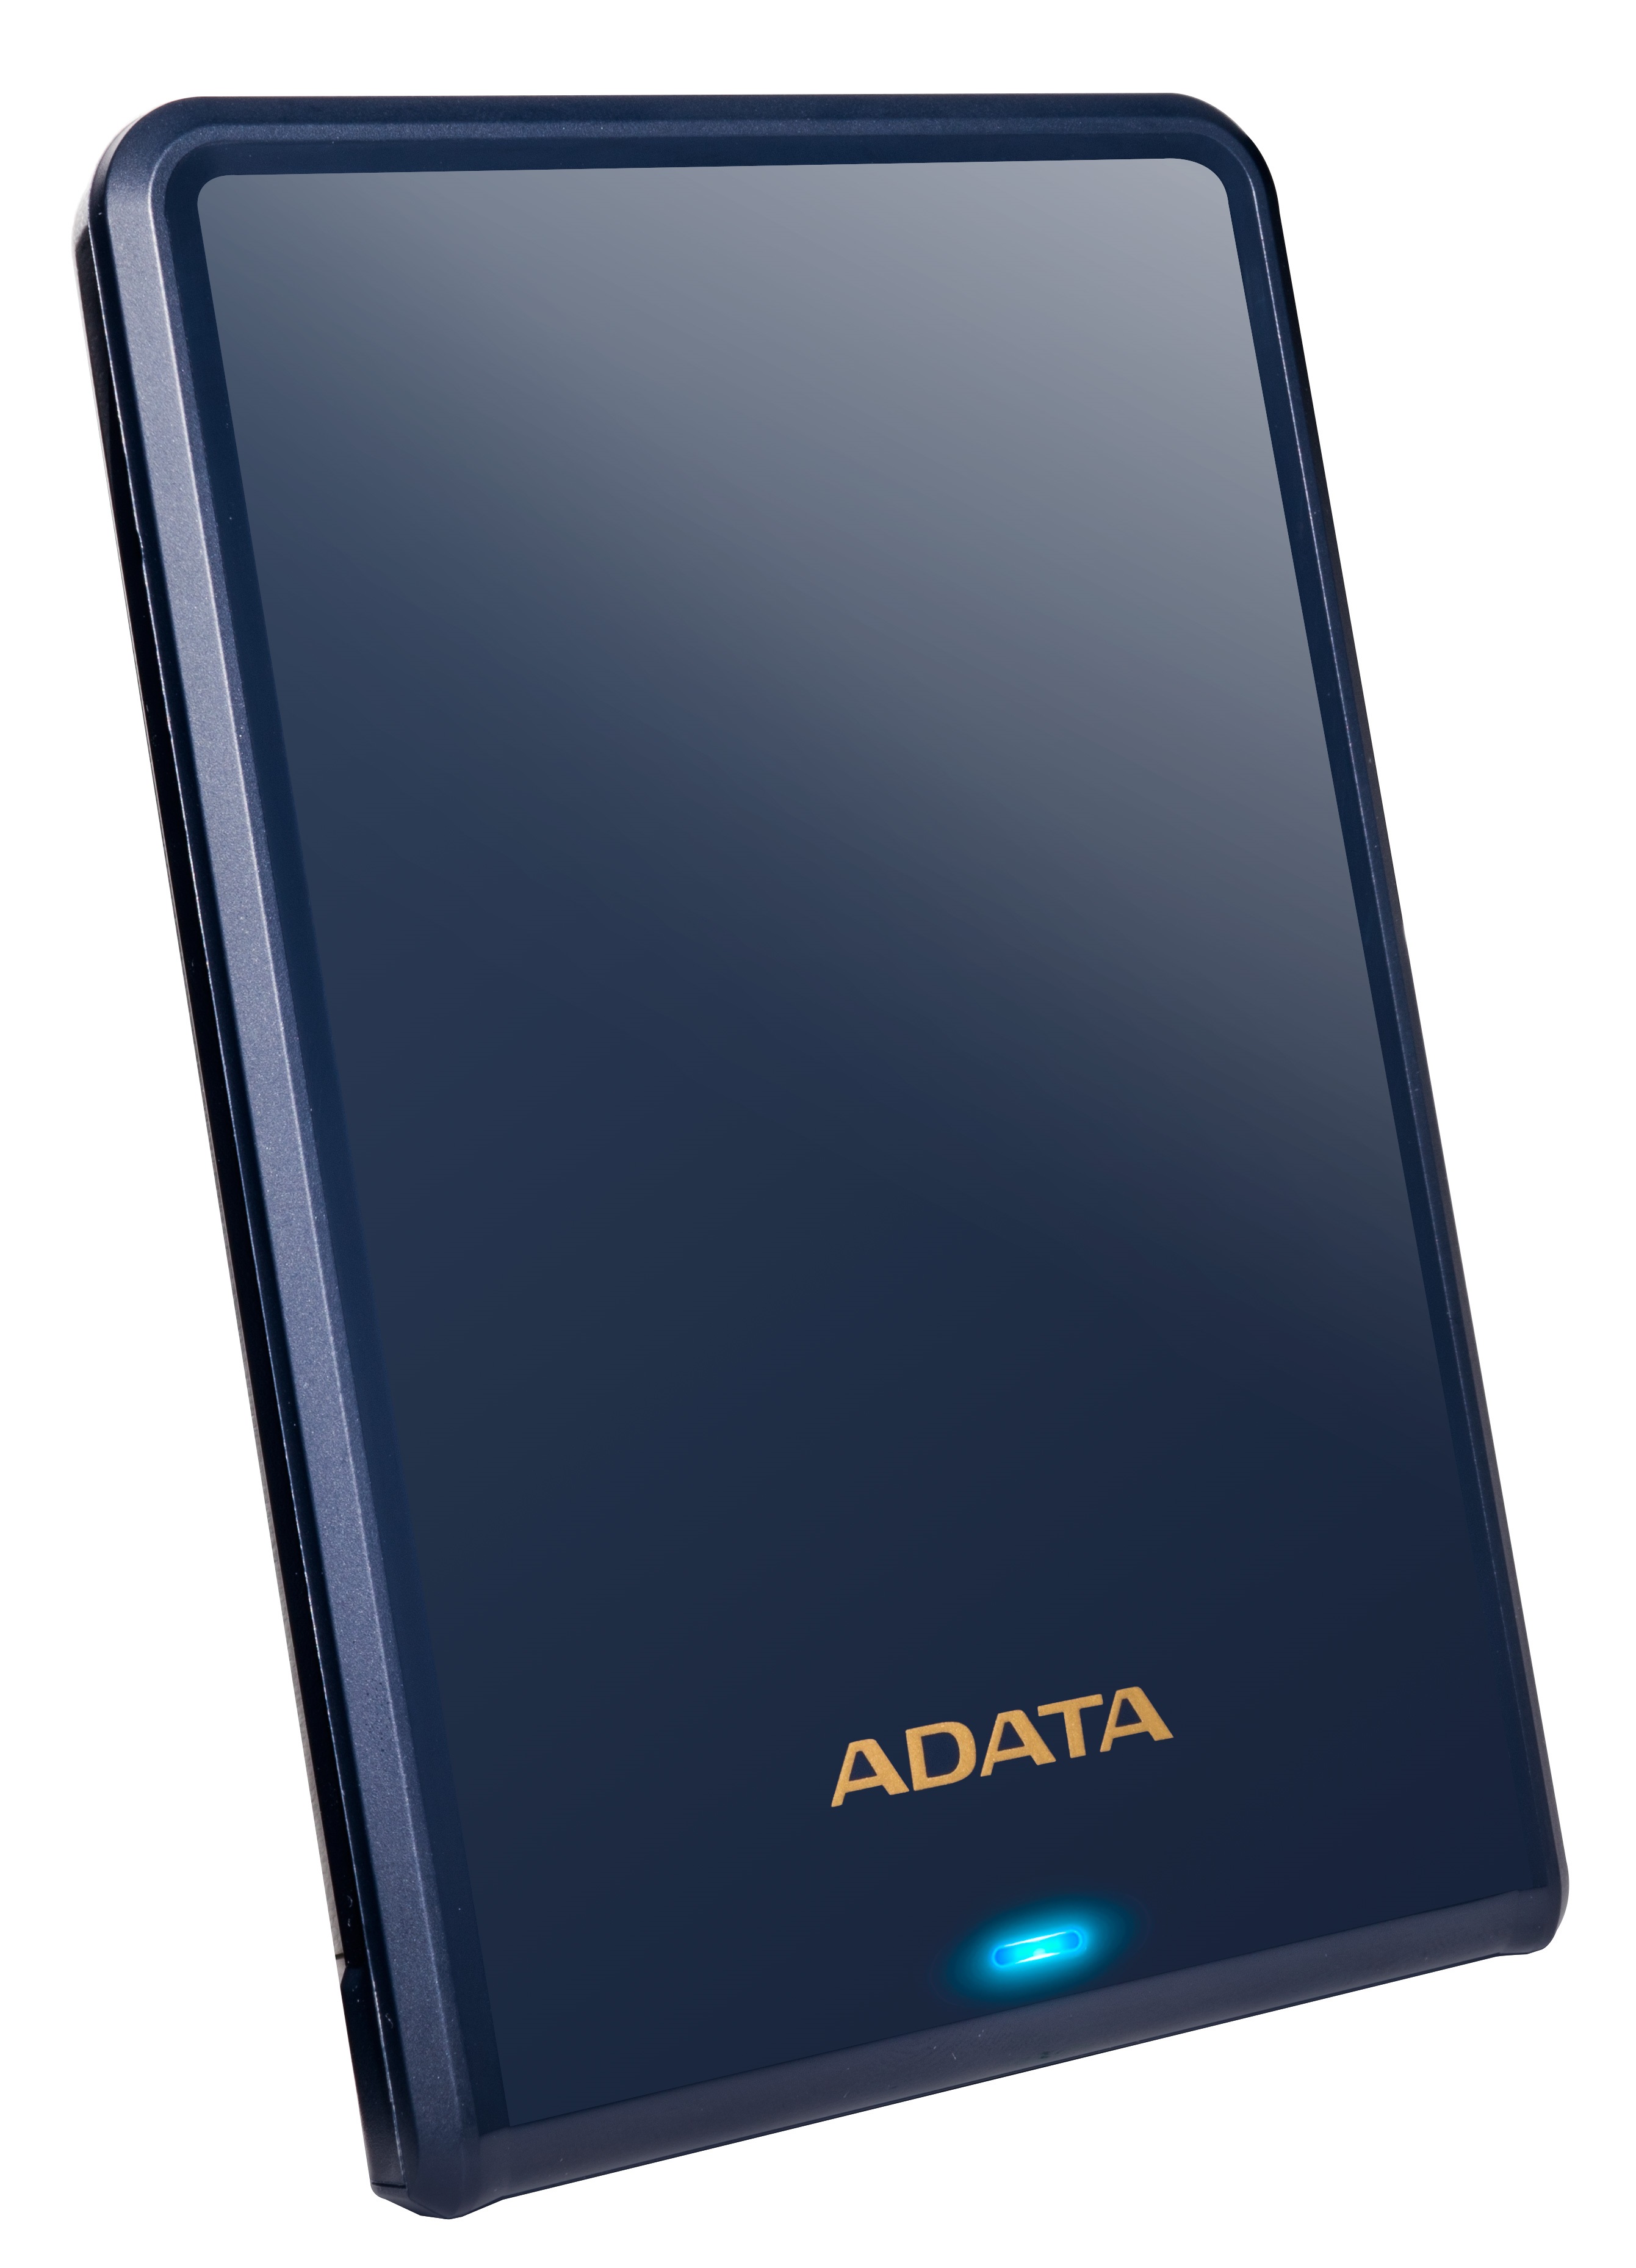 2TB AData HV620S USB3.1 Slim 11.5mm Portable Hard Drive Blue